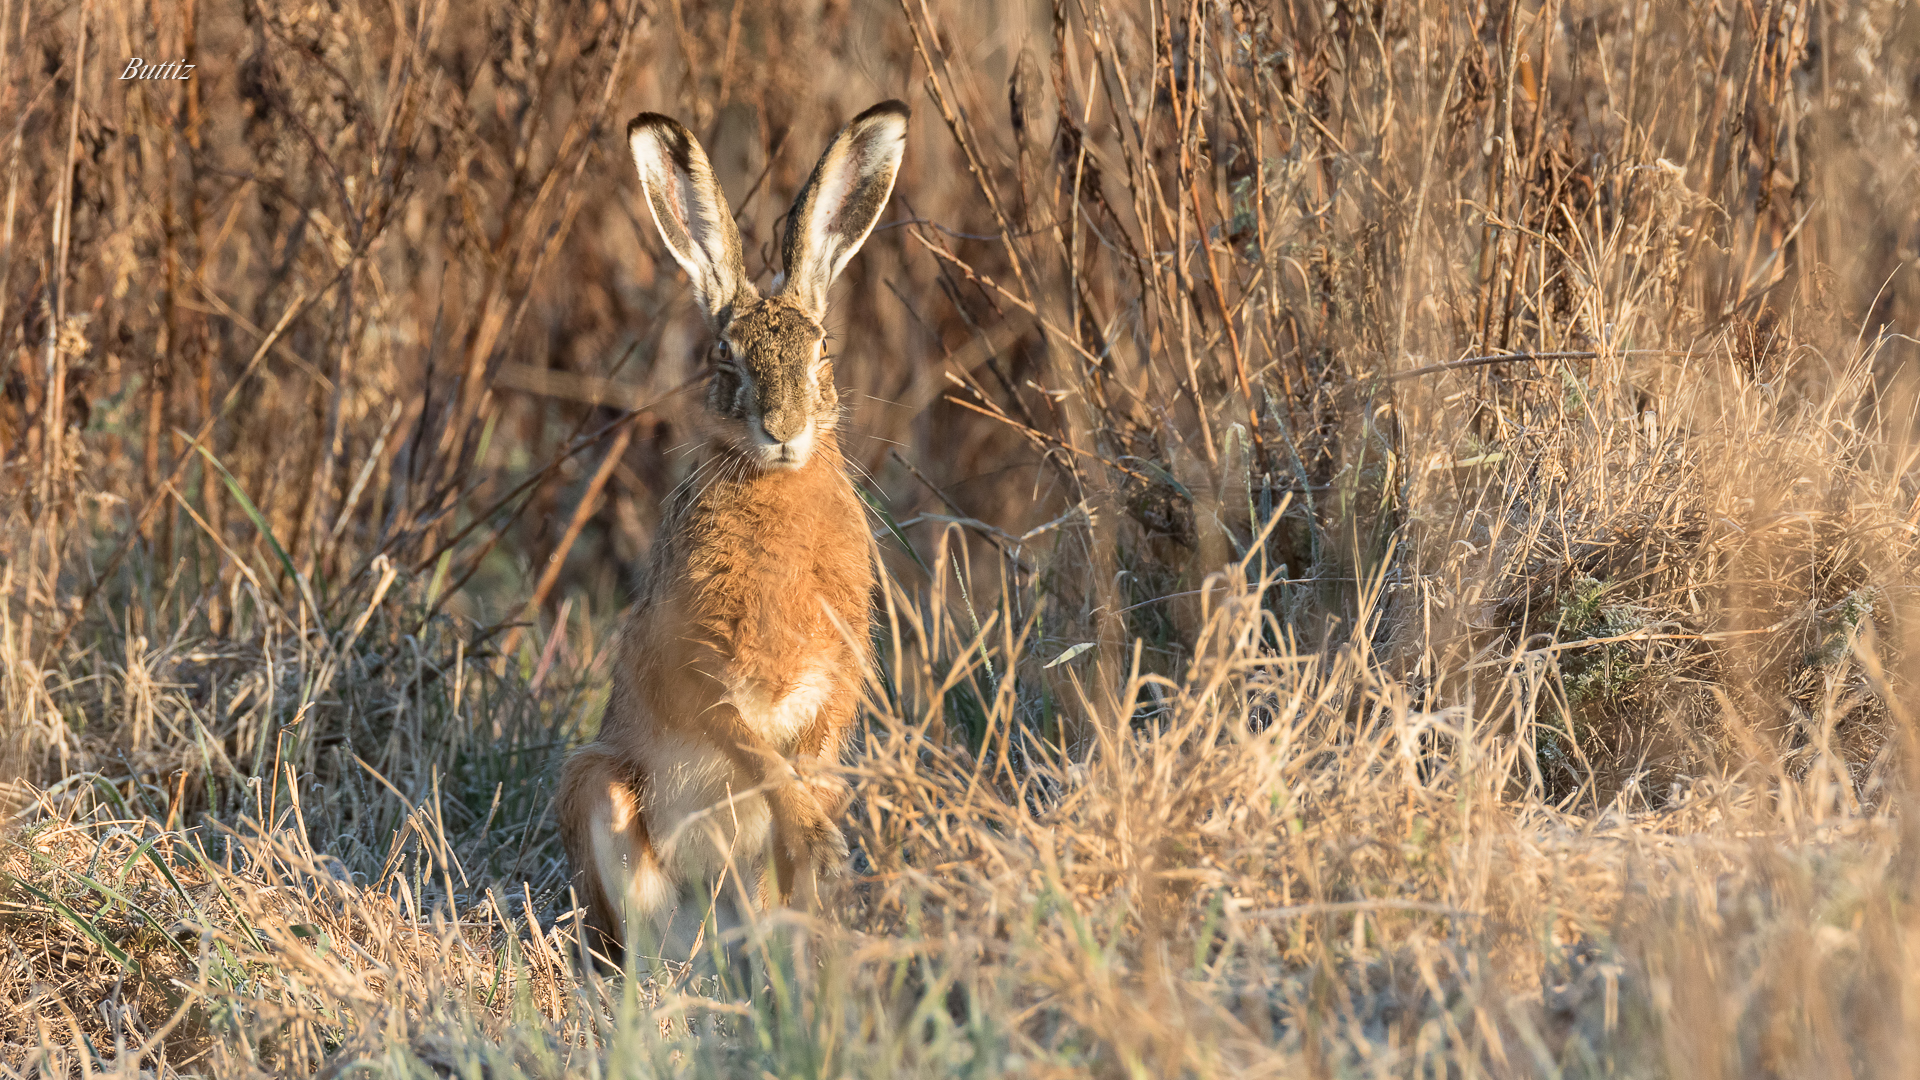 Common Hare at Dawn...